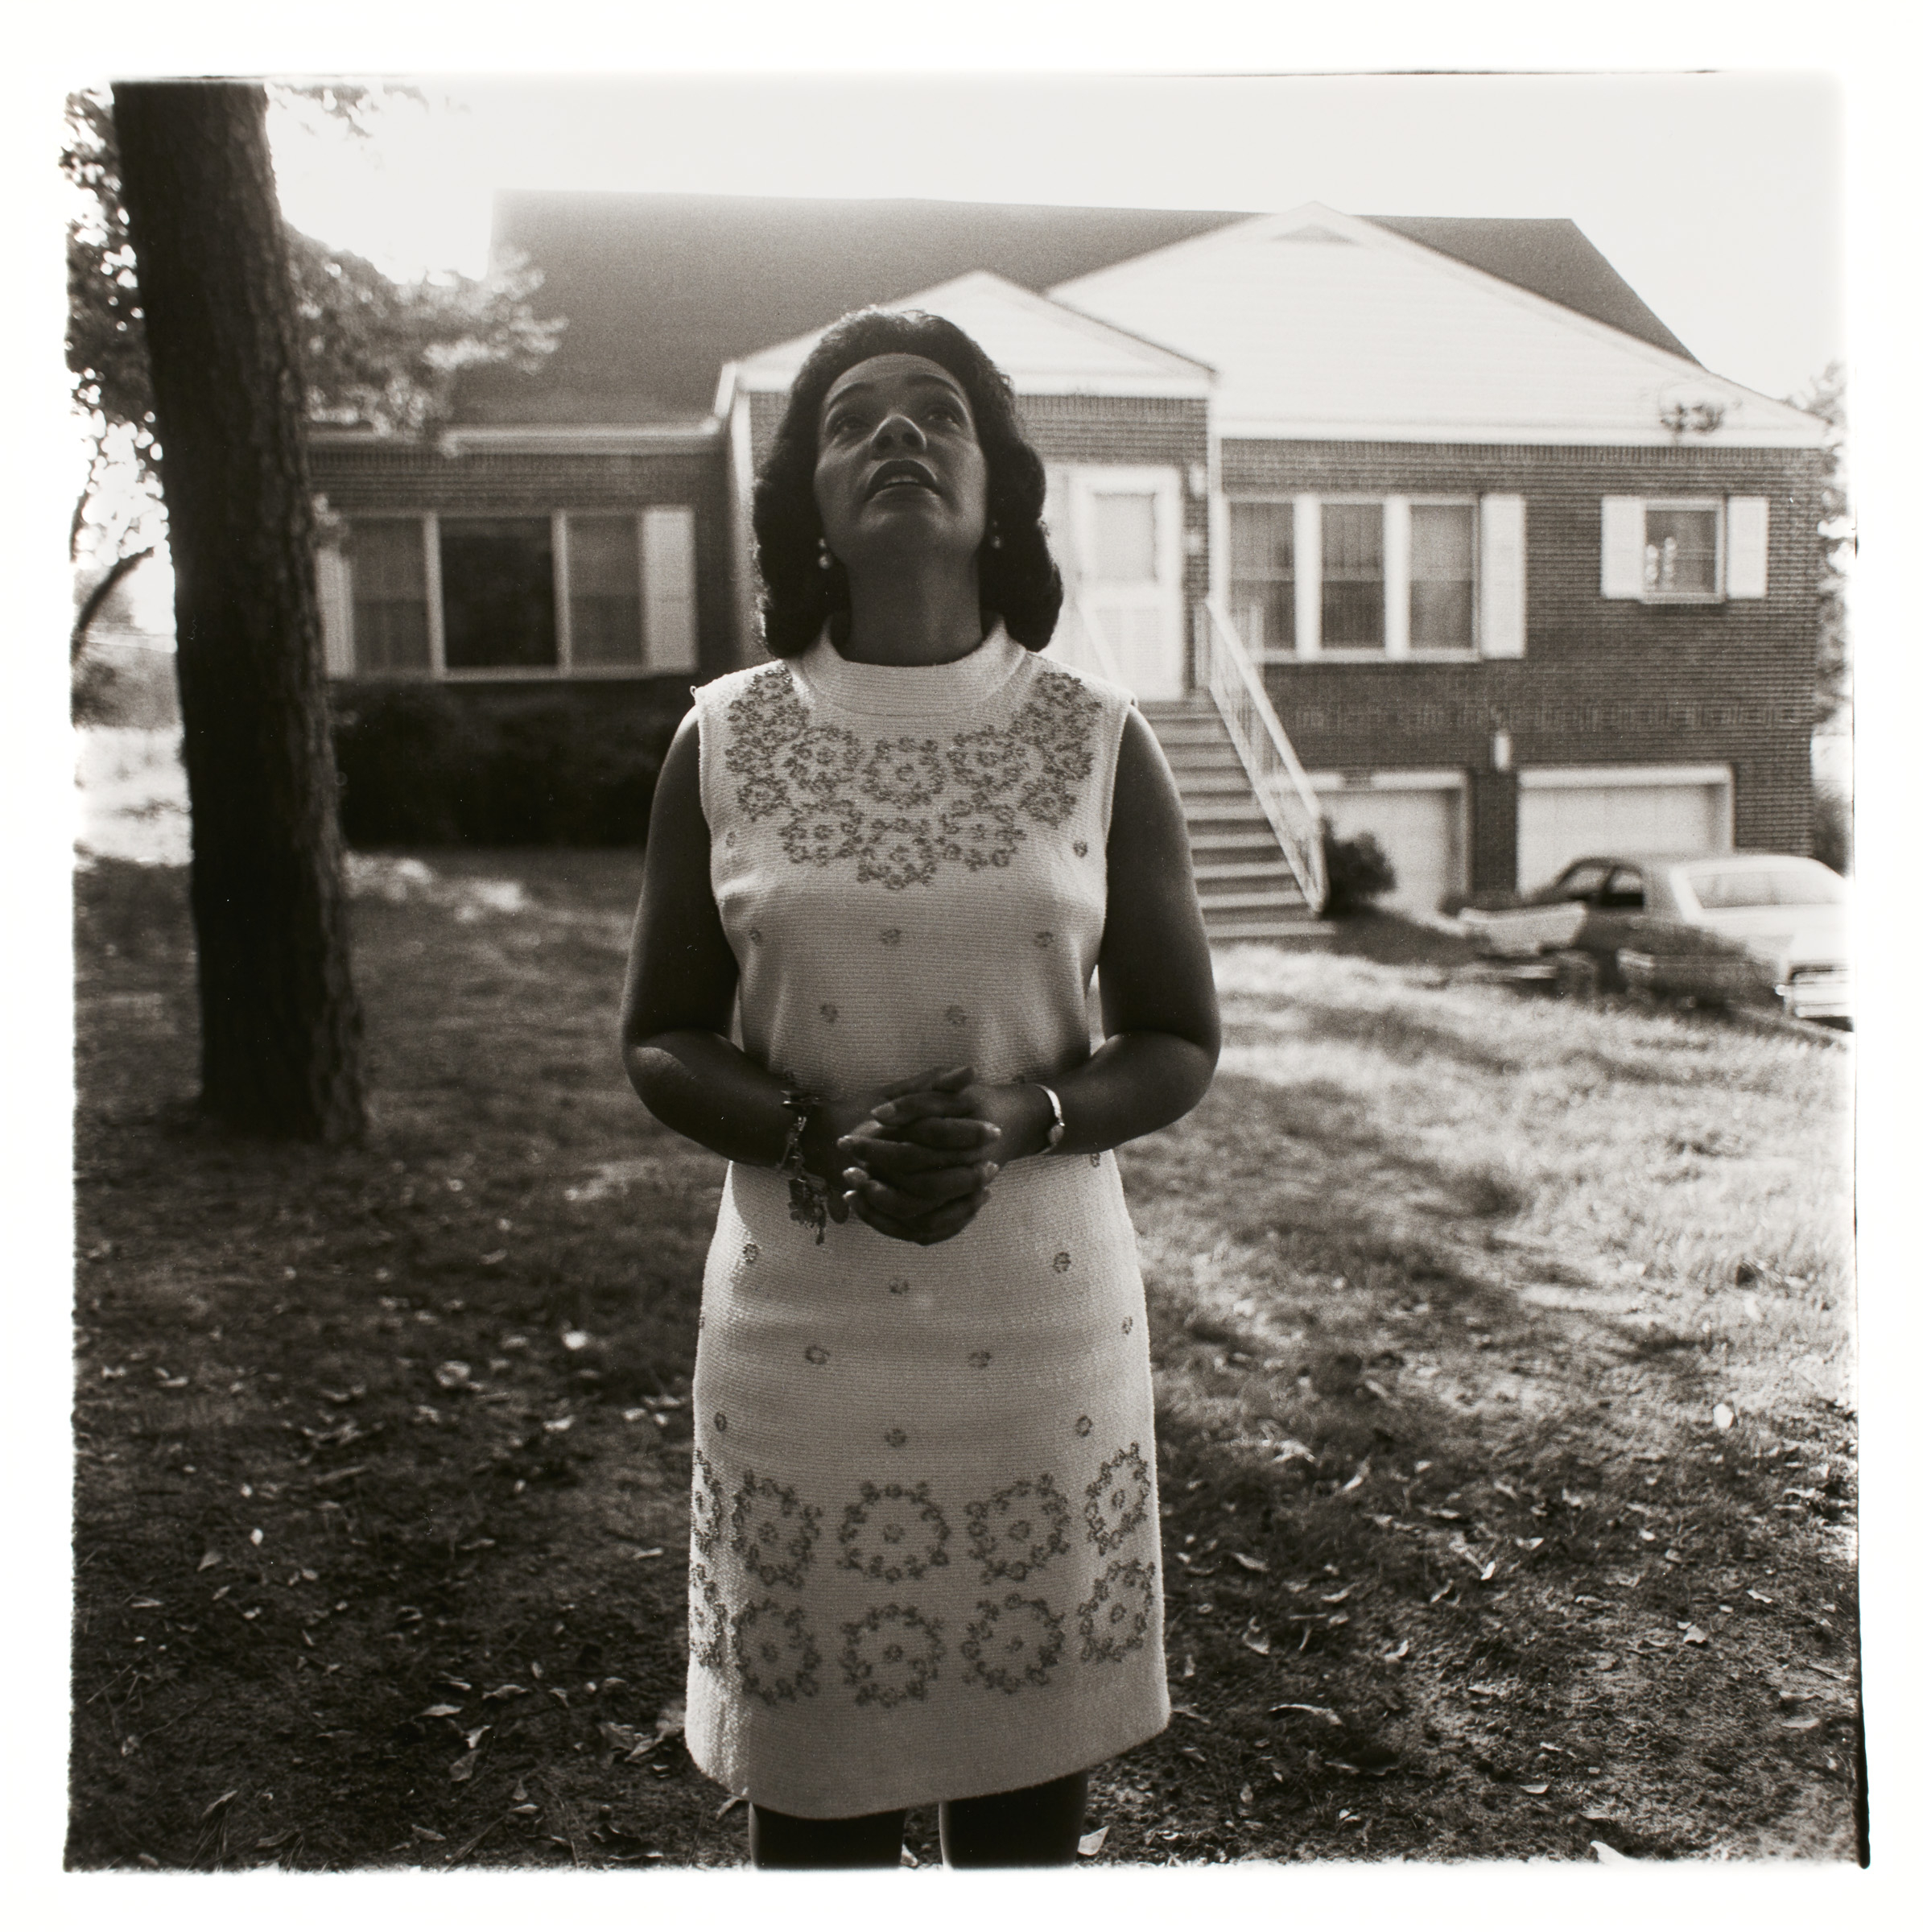     Diane Arbus, Mrs. Martin Luther King, Jr. on her front lawn, Atlanta, Ga., 1968. Gelatin silver print, sheet: 50.8 x 40.6 cm. Art Gallery of Ontario. Gift of Phil Lind, 2016. Copyright © The Estate of Diane Arbus.

